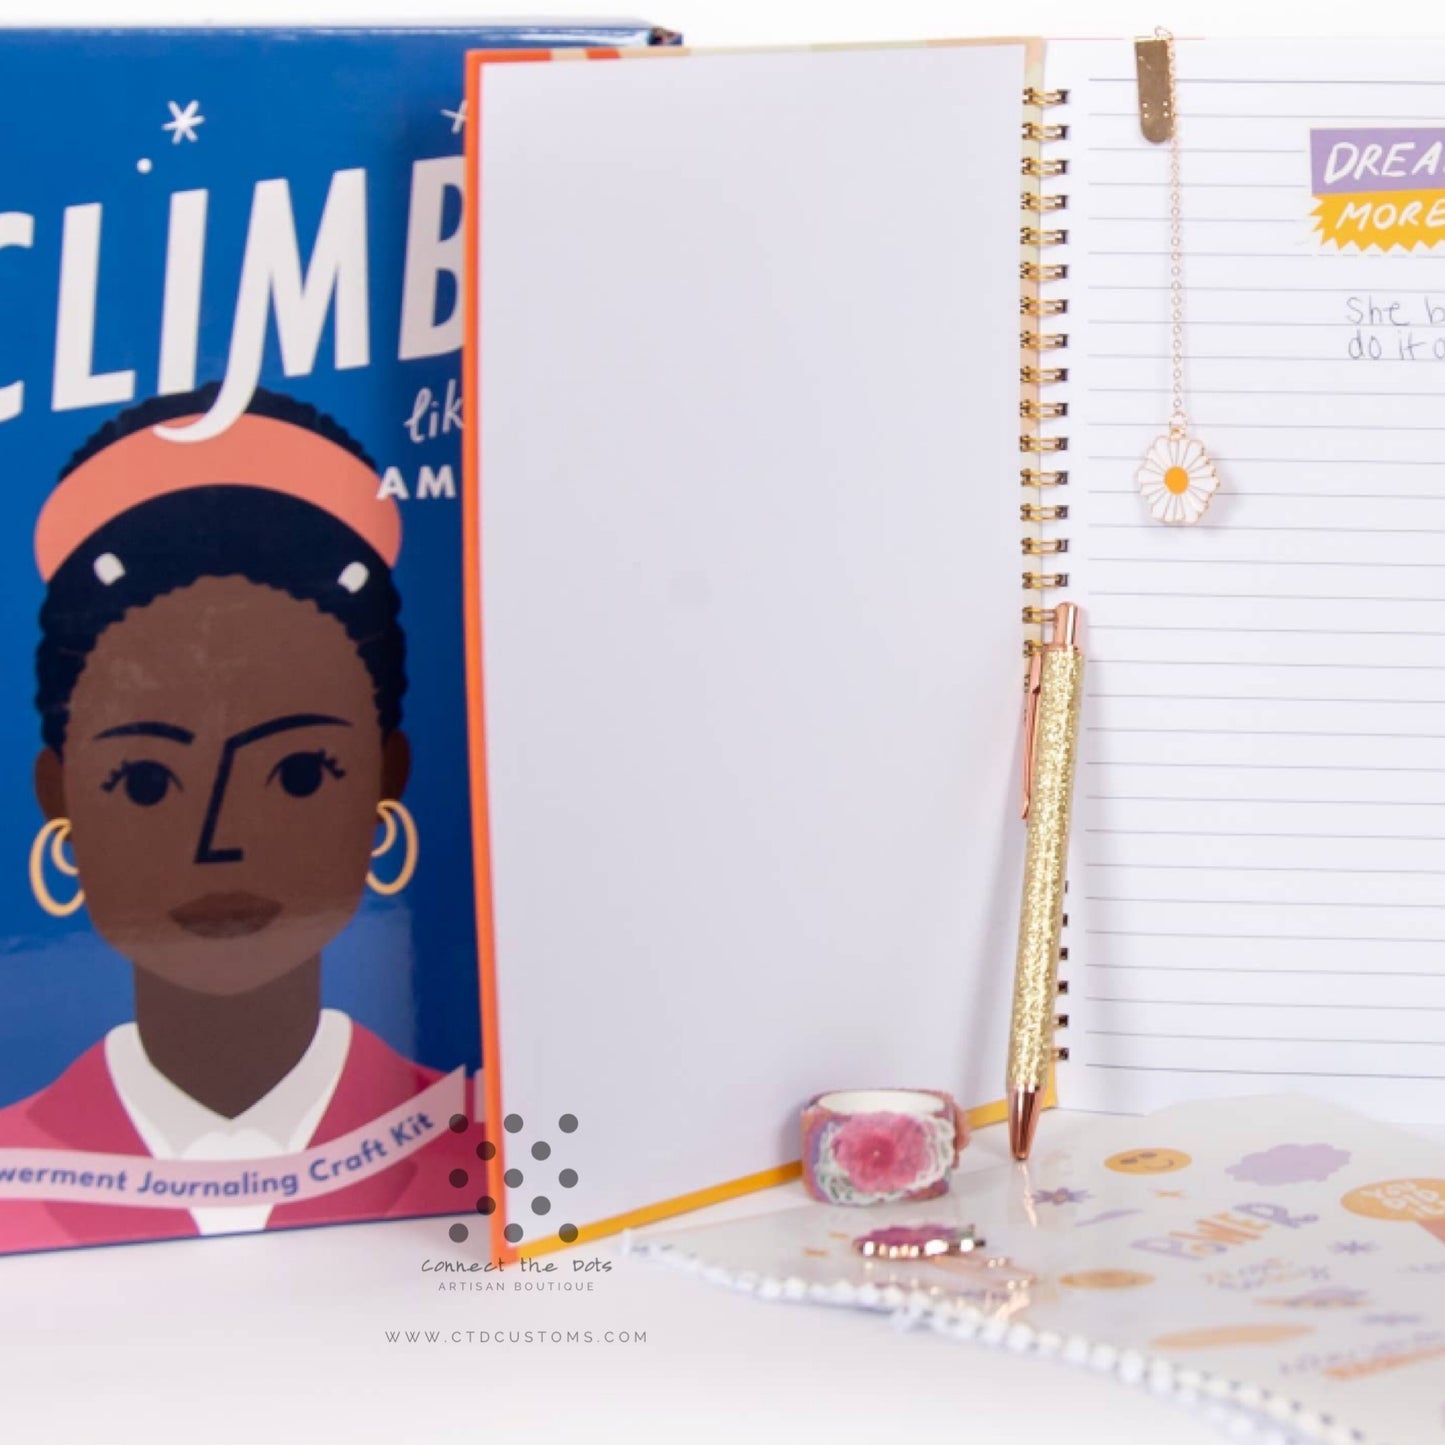 CLIMB like Amanda: Empowerment Journal Craft Kit